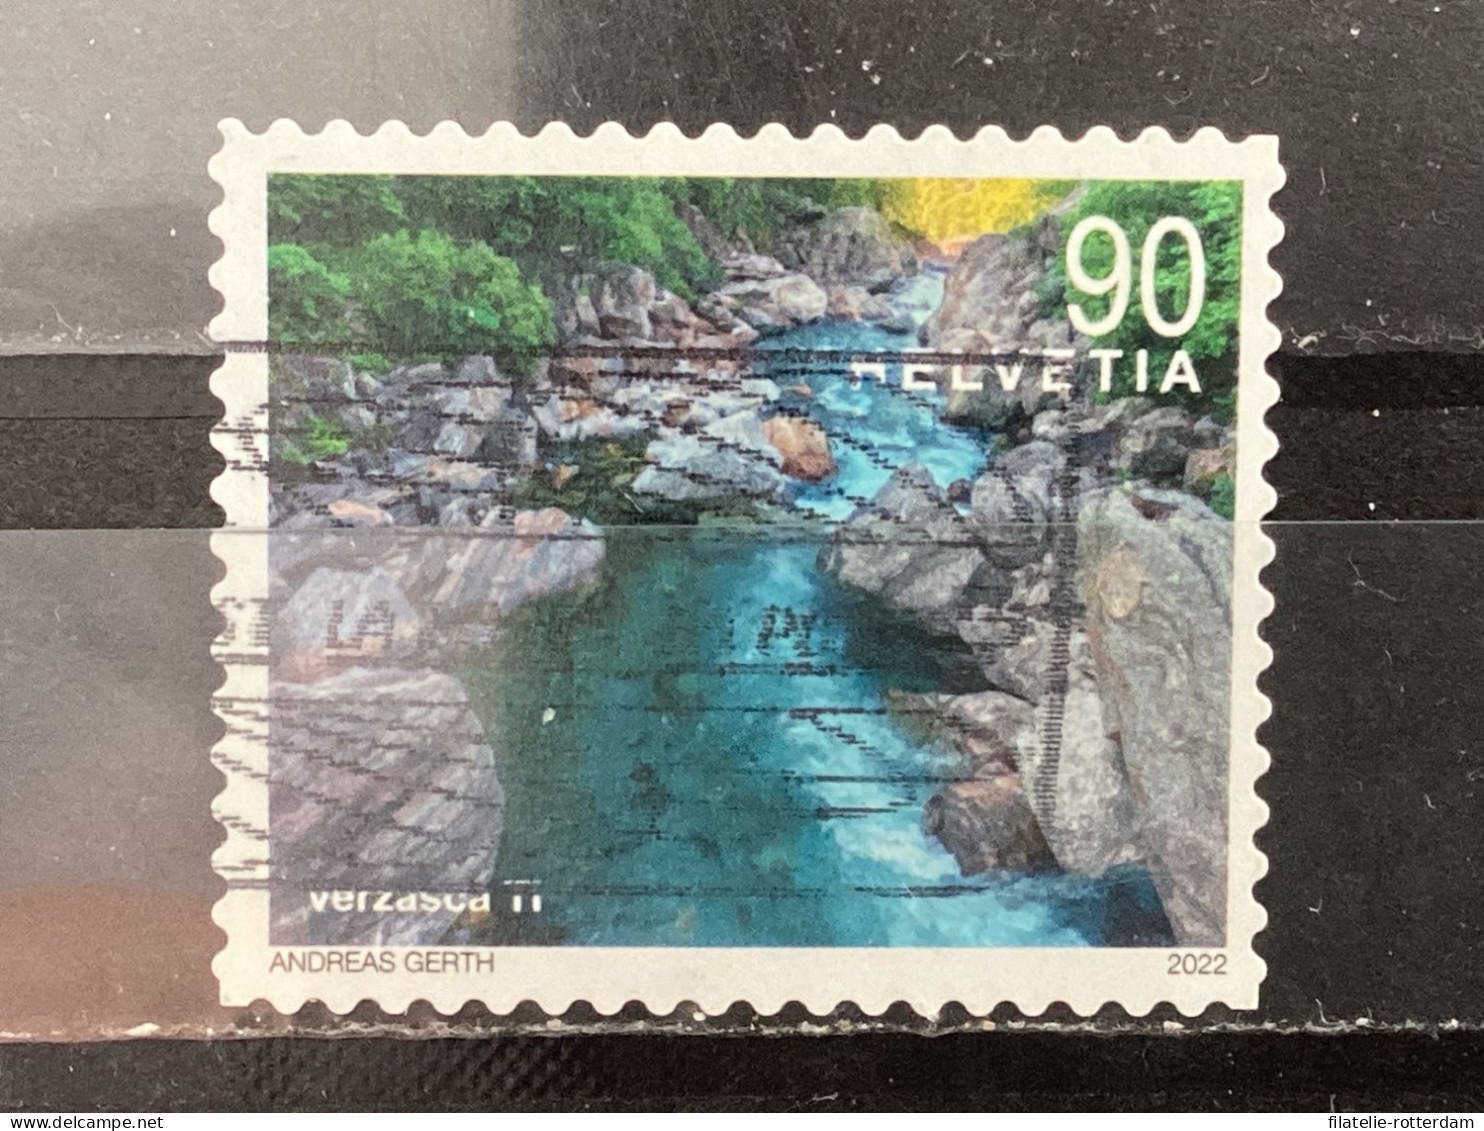 Switzerland / Zwitserland - Landscapes (90) 2022 - Used Stamps